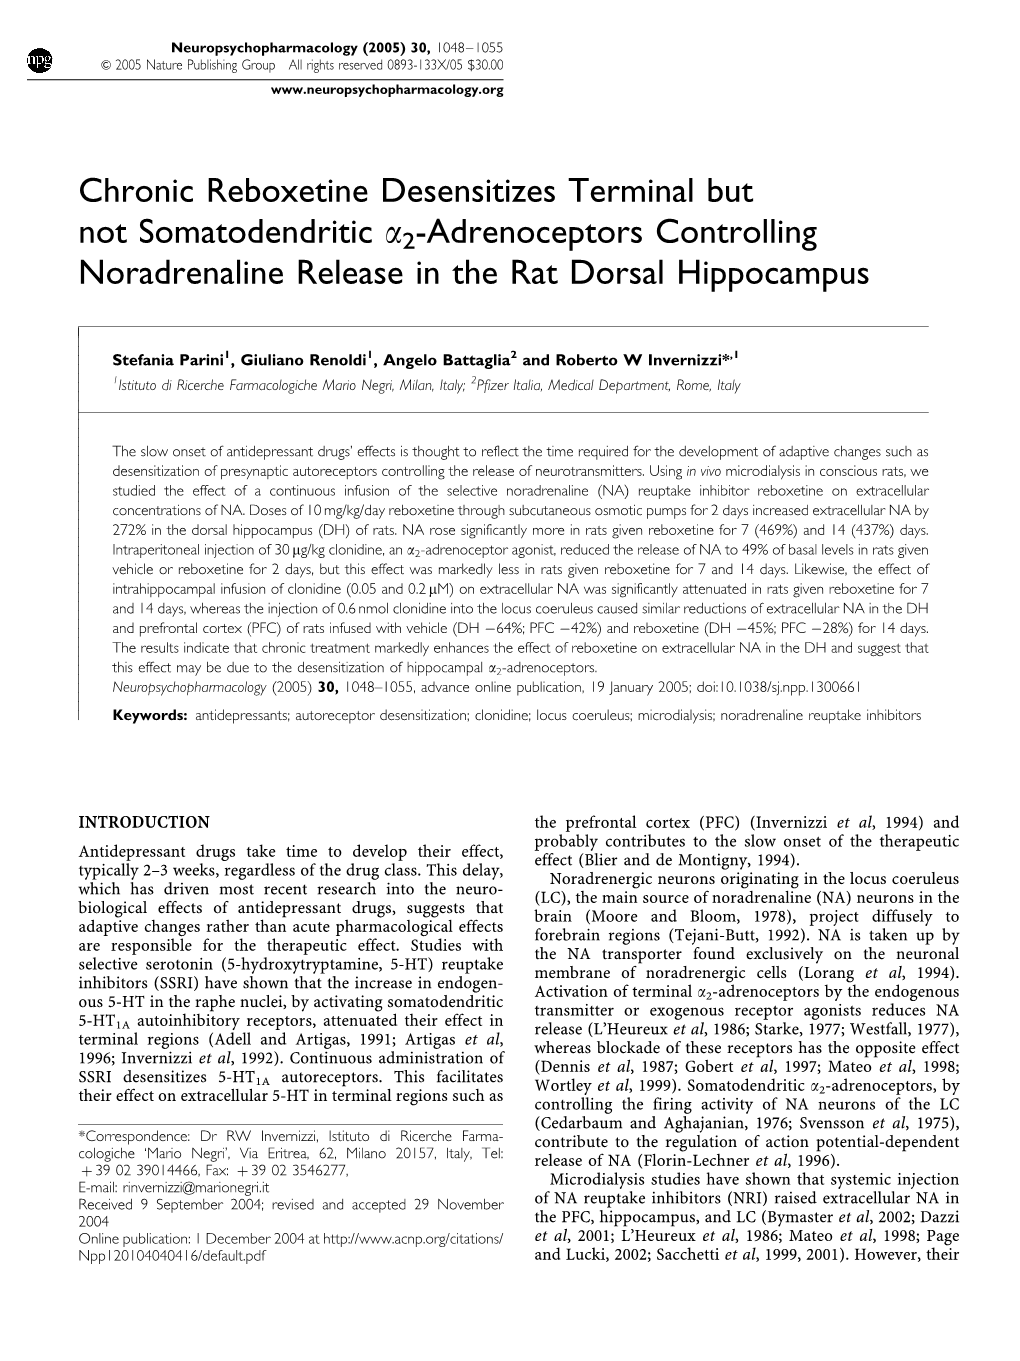 Chronic Reboxetine Desensitizes Terminal but Not Somatodendritic A2-Adrenoceptors Controlling Noradrenaline Release in the Rat Dorsal Hippocampus